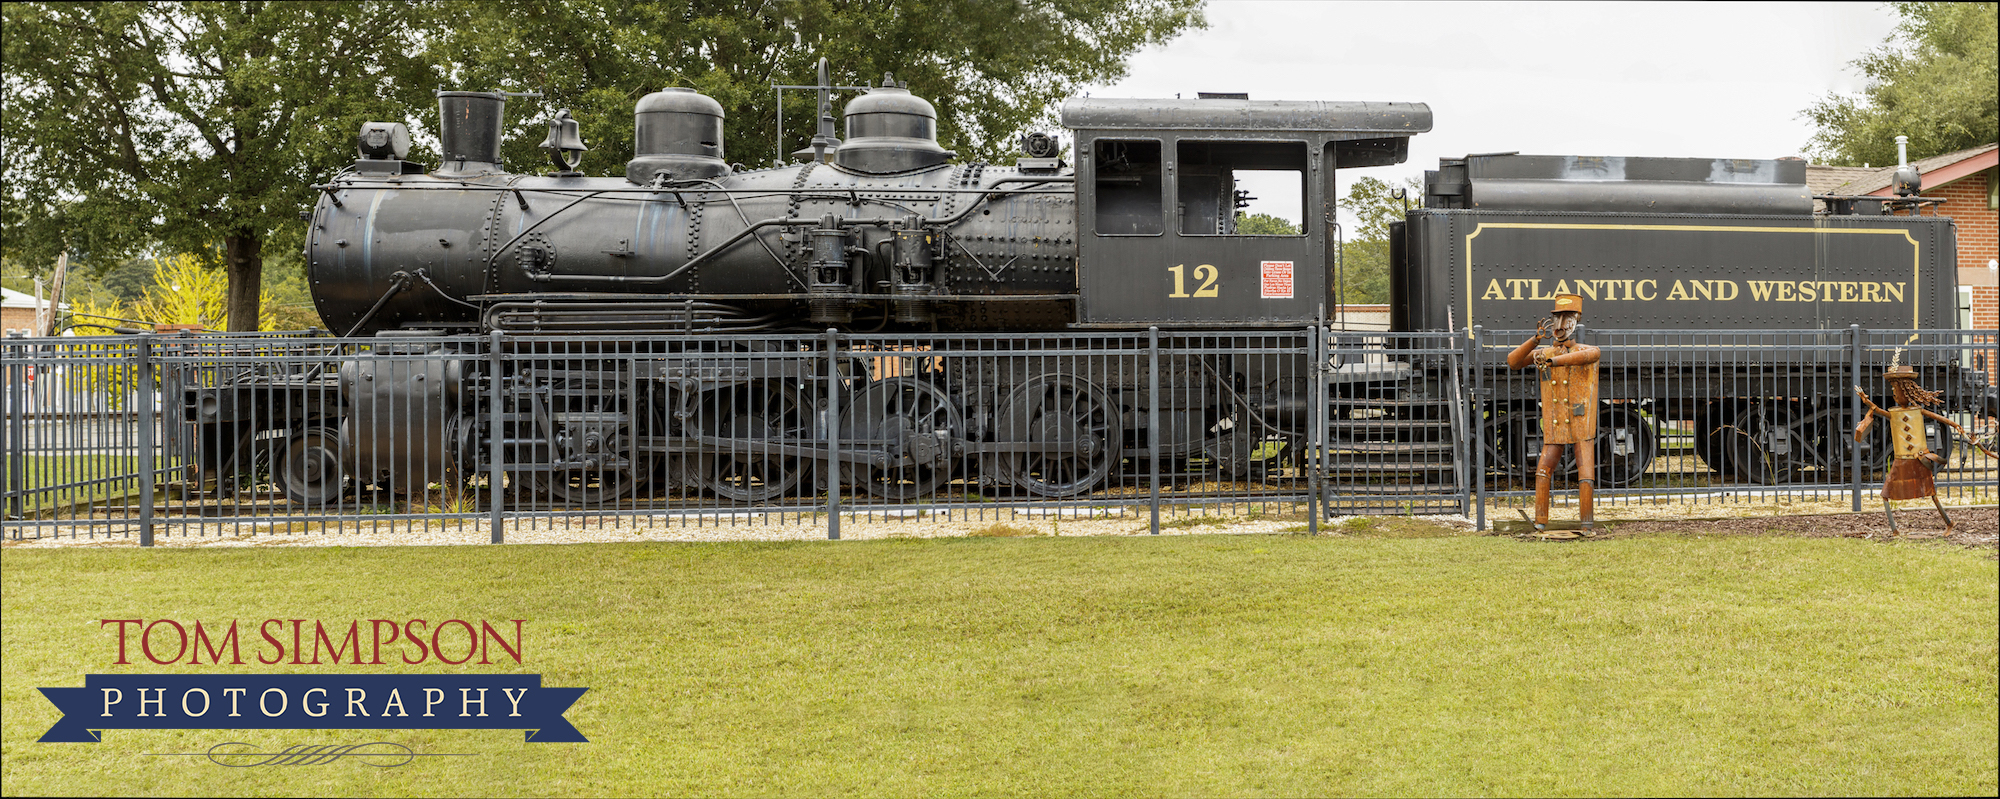 old depot has historic locomotive on display